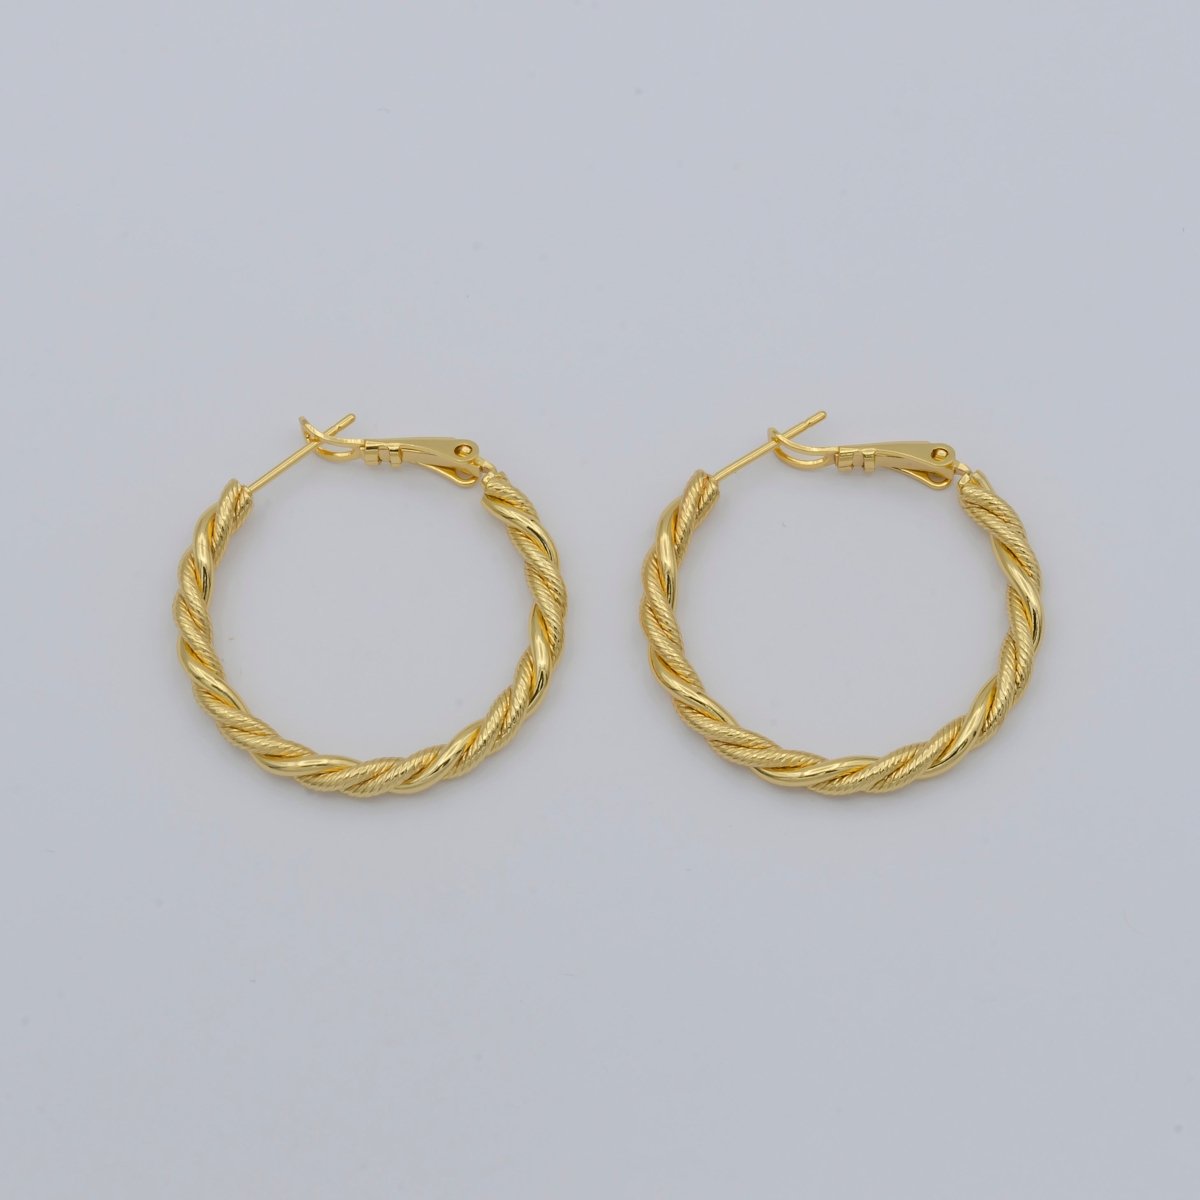 Simple Golden Thin Braid Twist Huggies Earrings, Plain Gold Filled Mini Geometric Unique Shape Formal/Casual Daily Wear Hinge hoop Earring Jewelry P-109 P-110 P-111 - DLUXCA